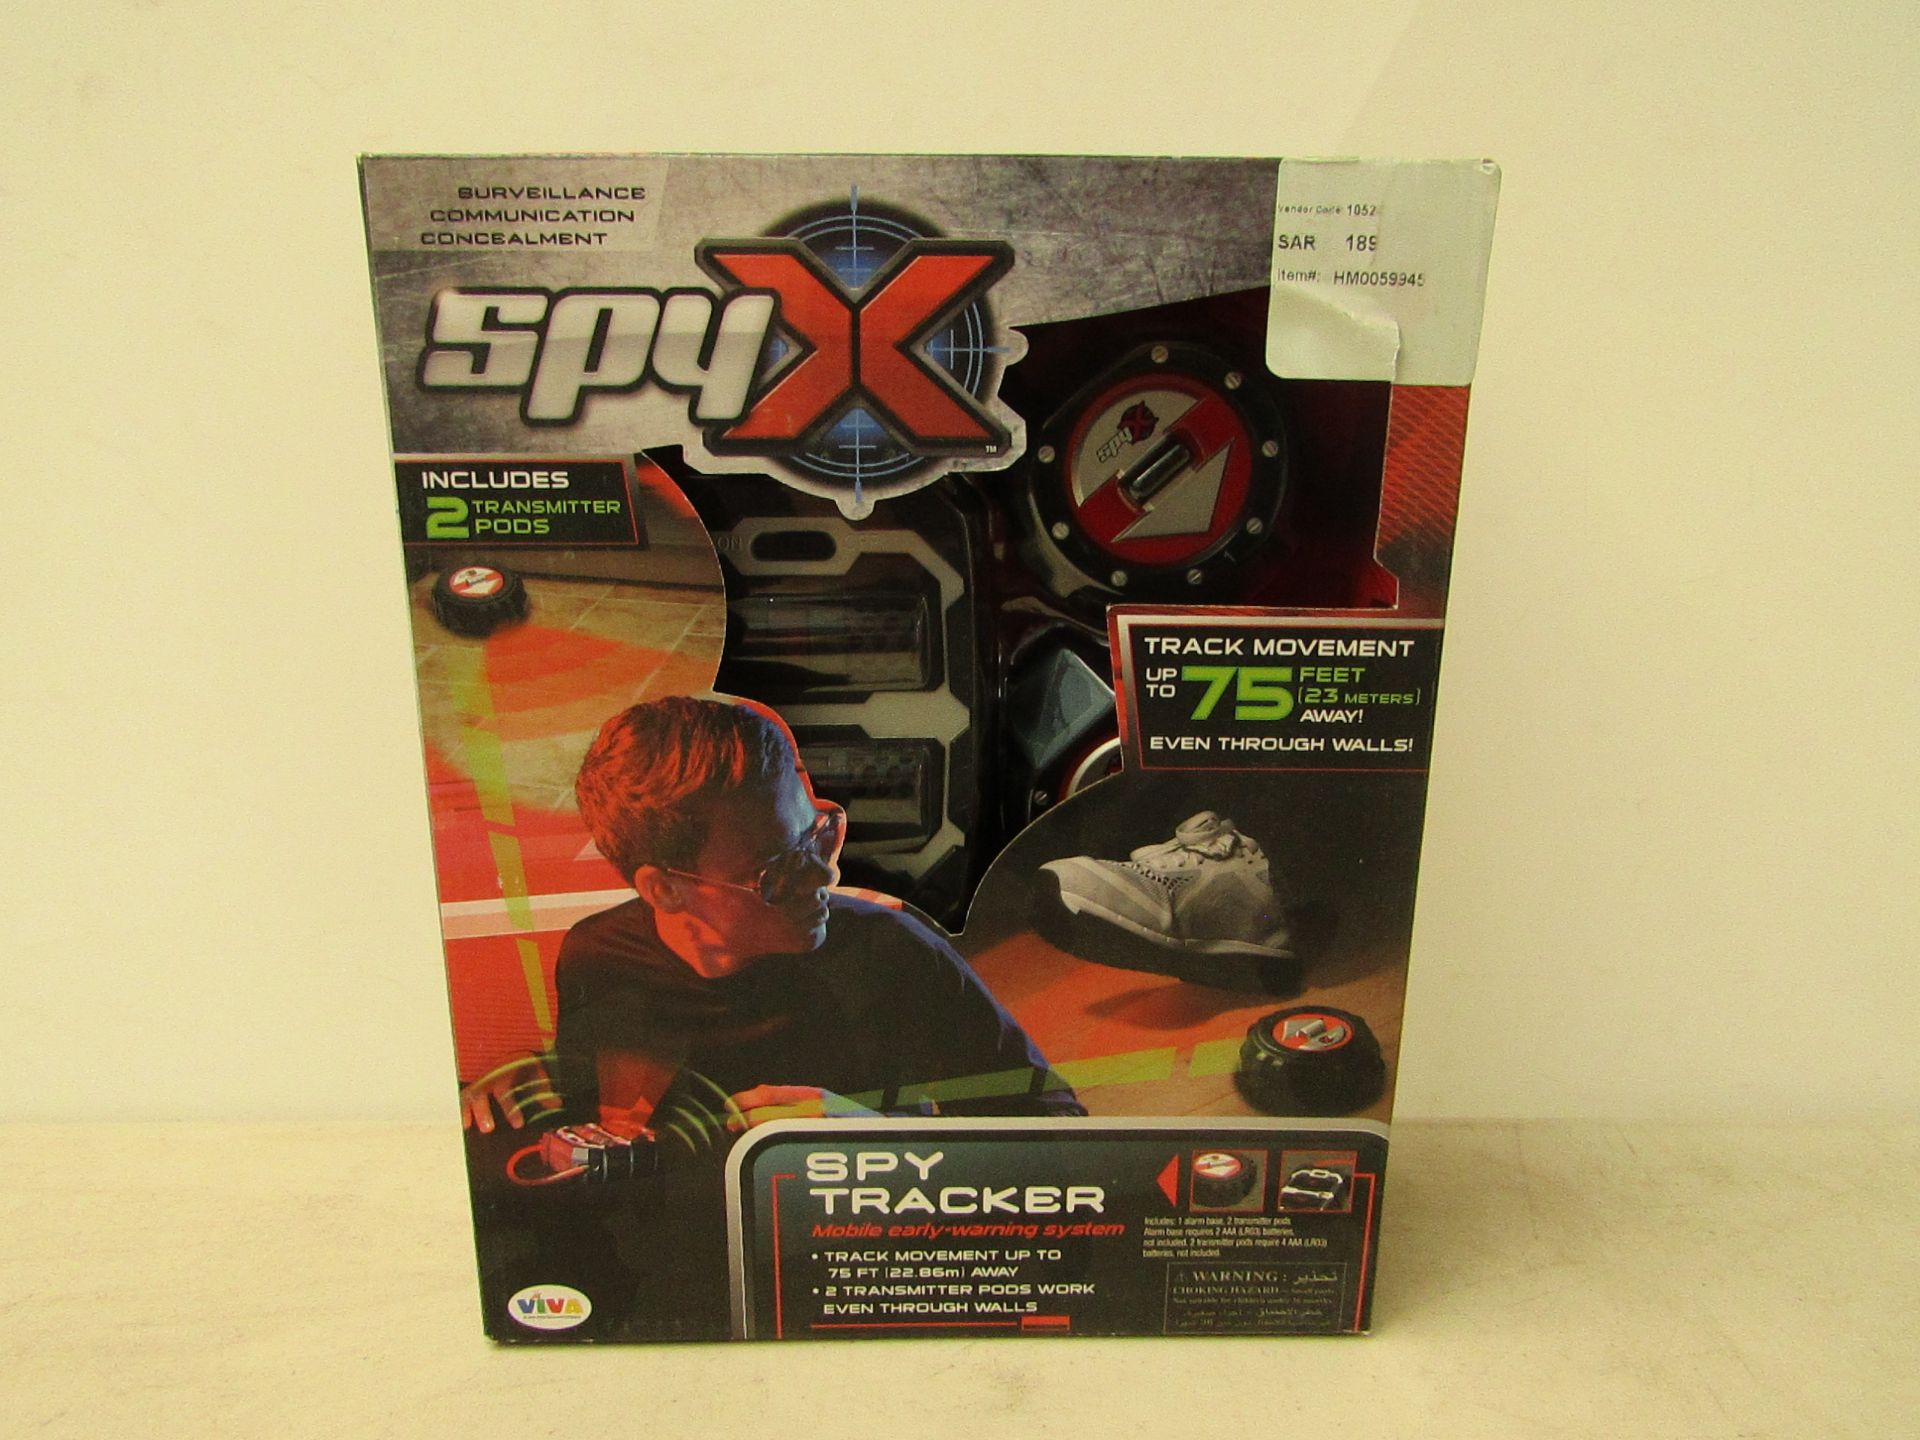 Spy-X spy tracker kit, new and boxed. RRP £17 at ToysRUs.